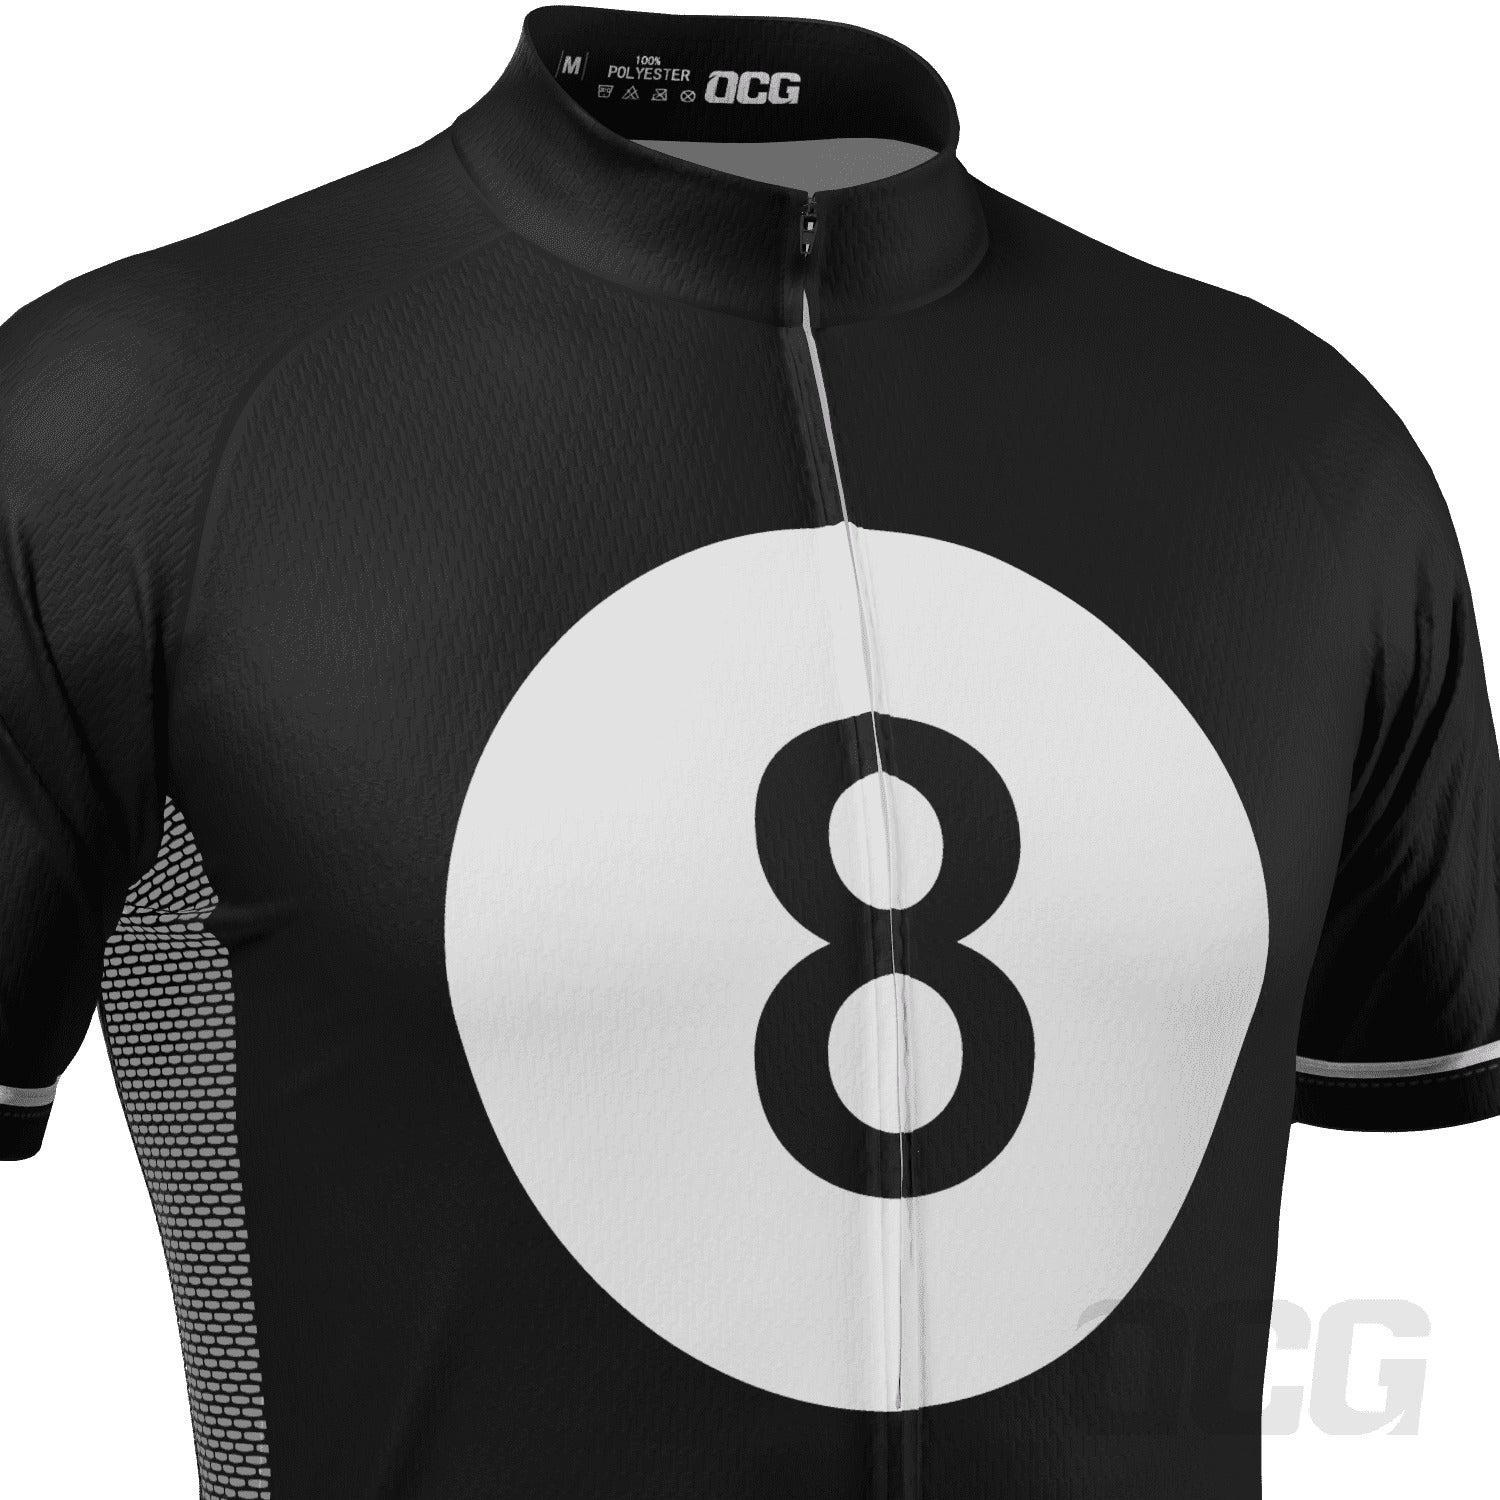 Men's Magic 8-Ball Black Short Sleeve Cycling Jersey